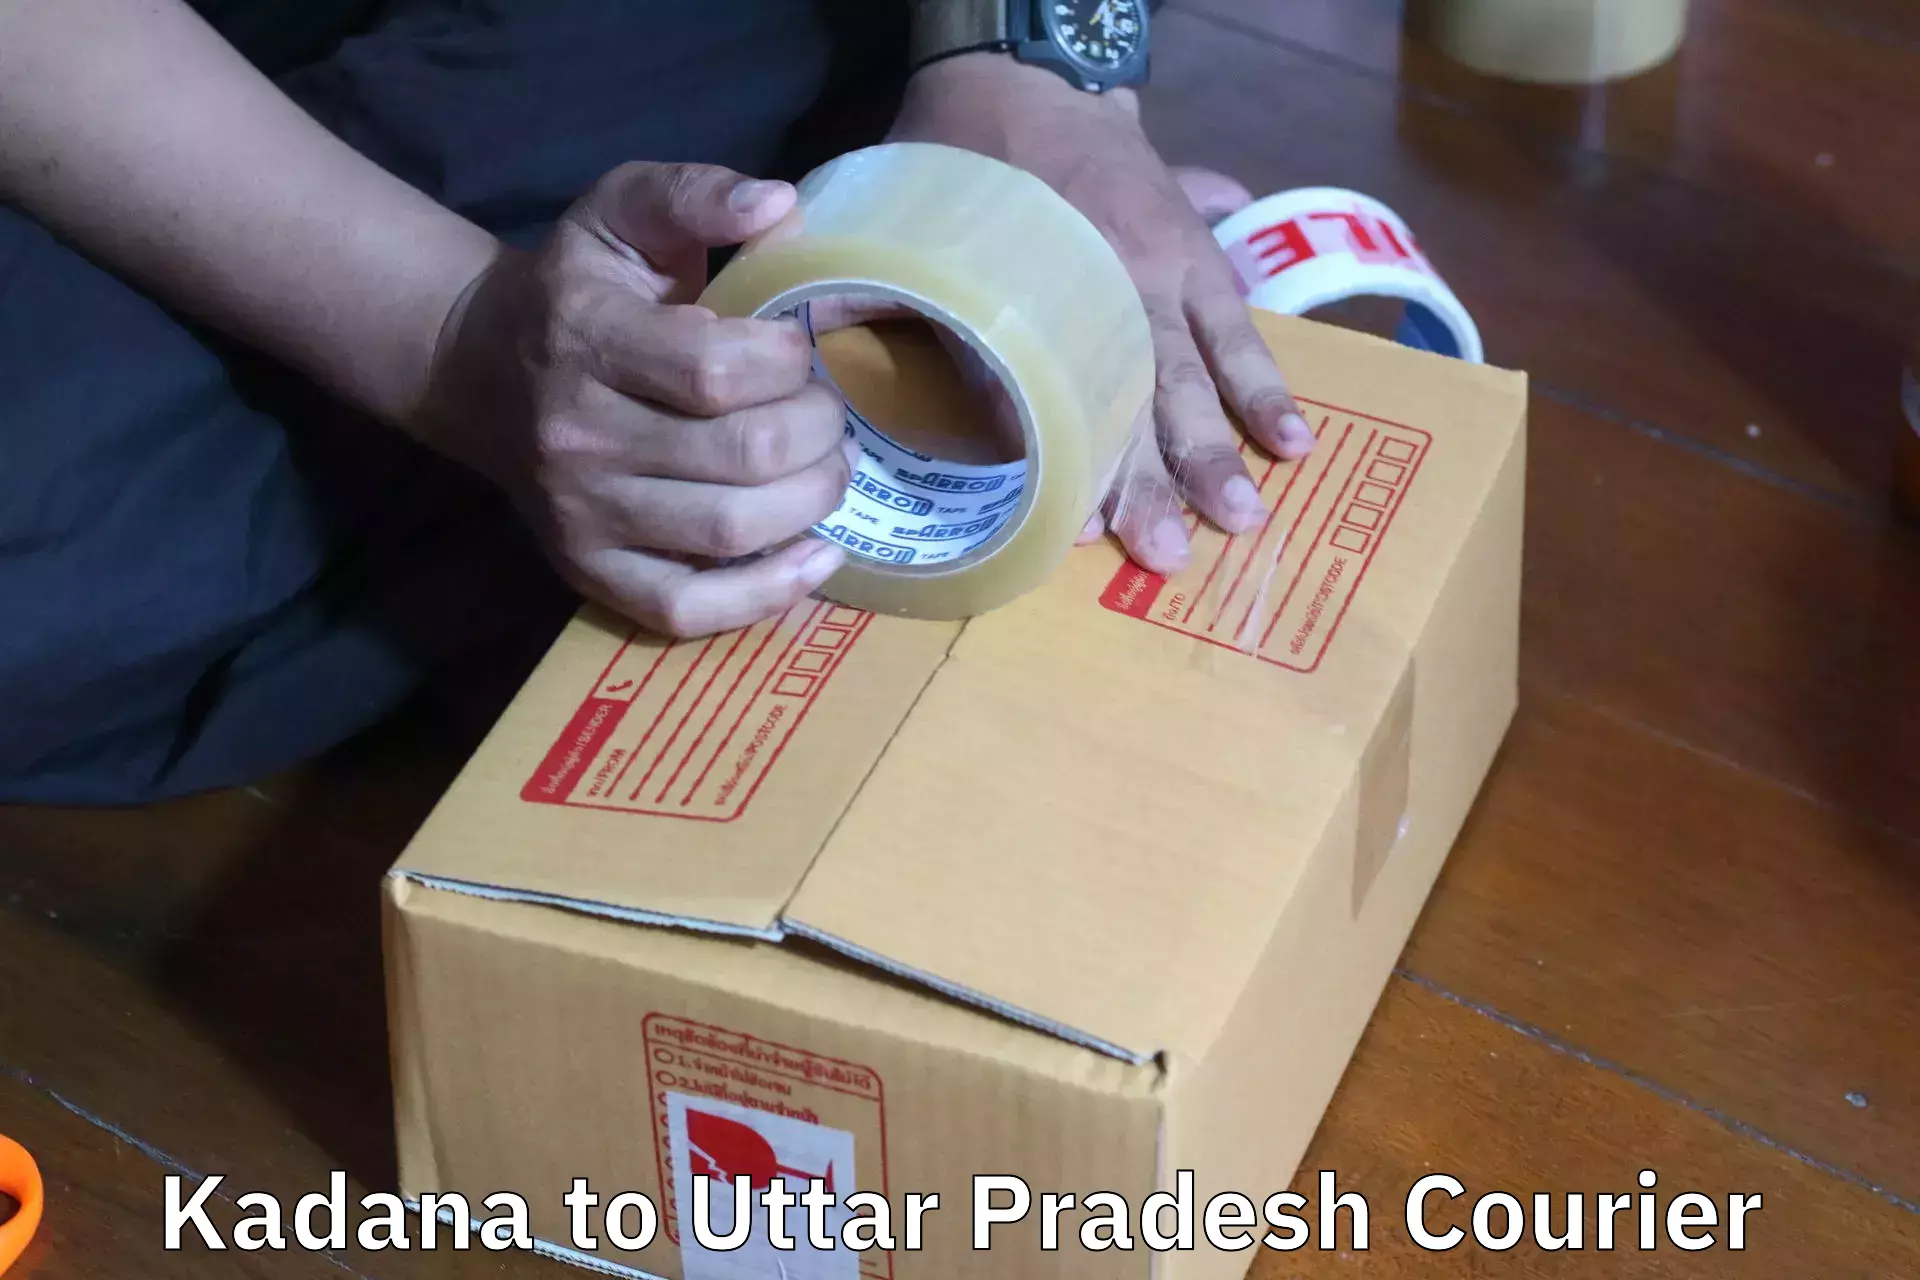 Professional moving company Kadana to Ayodhya